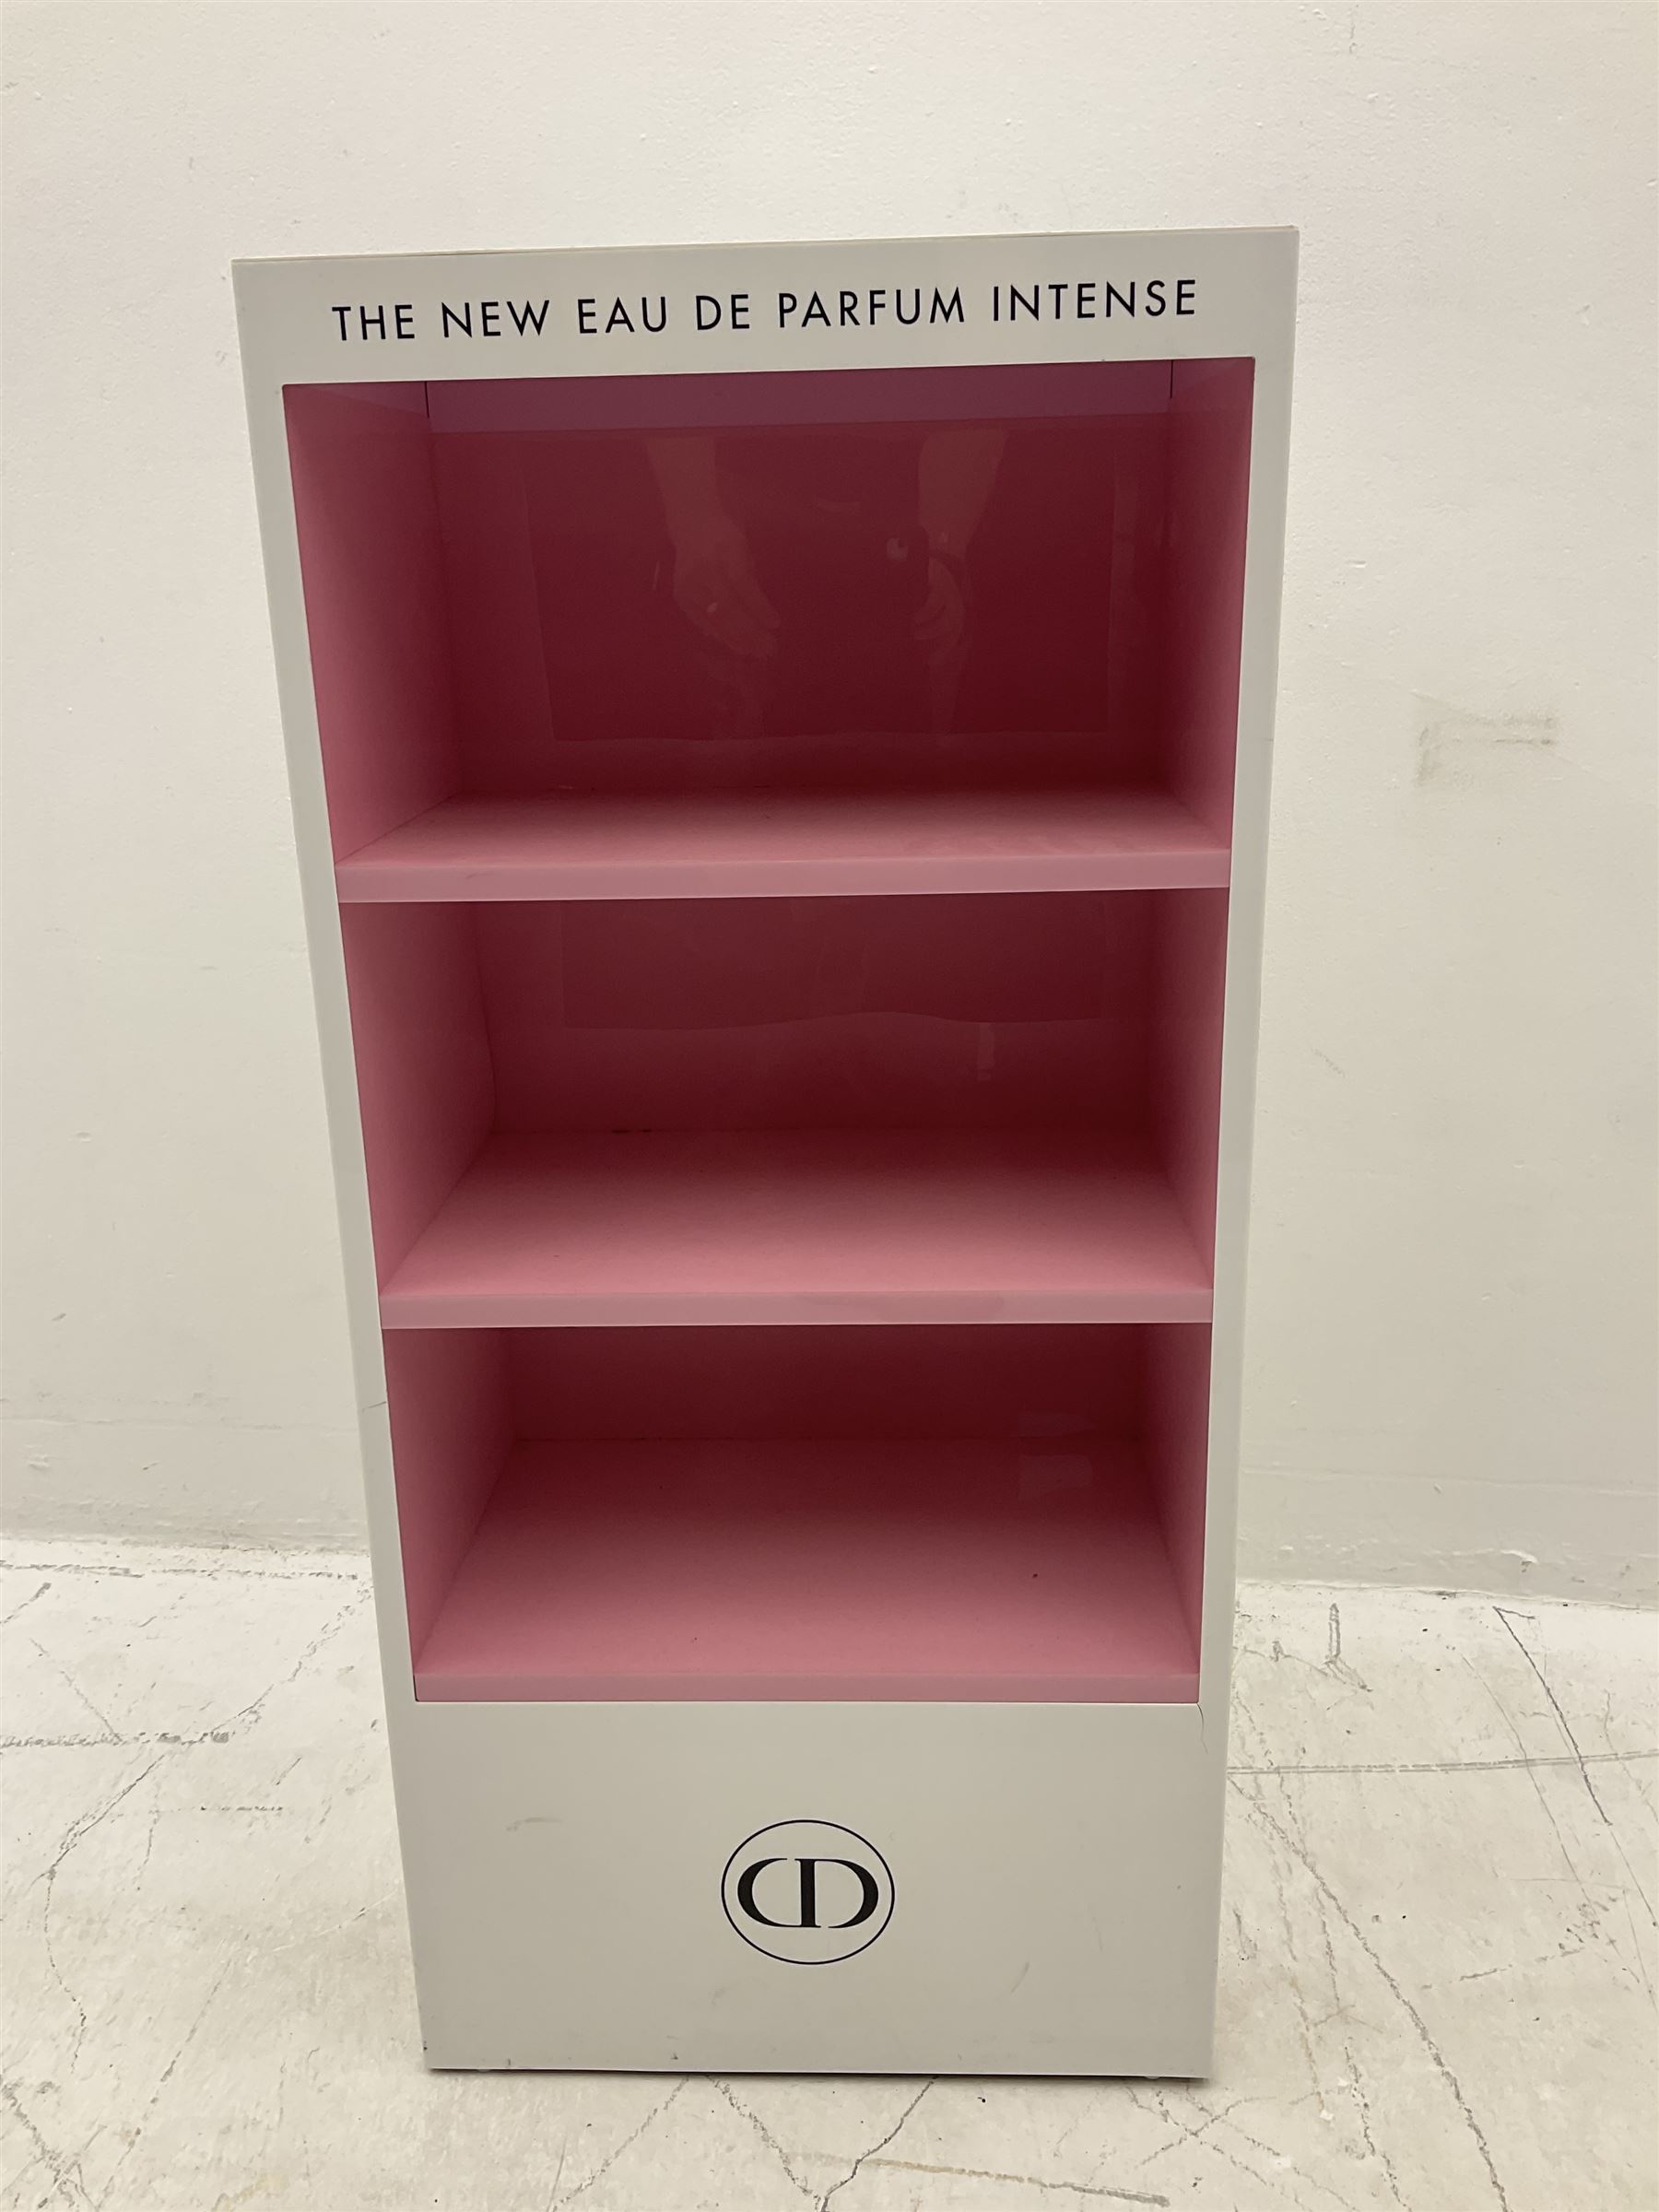 Christian Dior shop display stand - Image 6 of 6